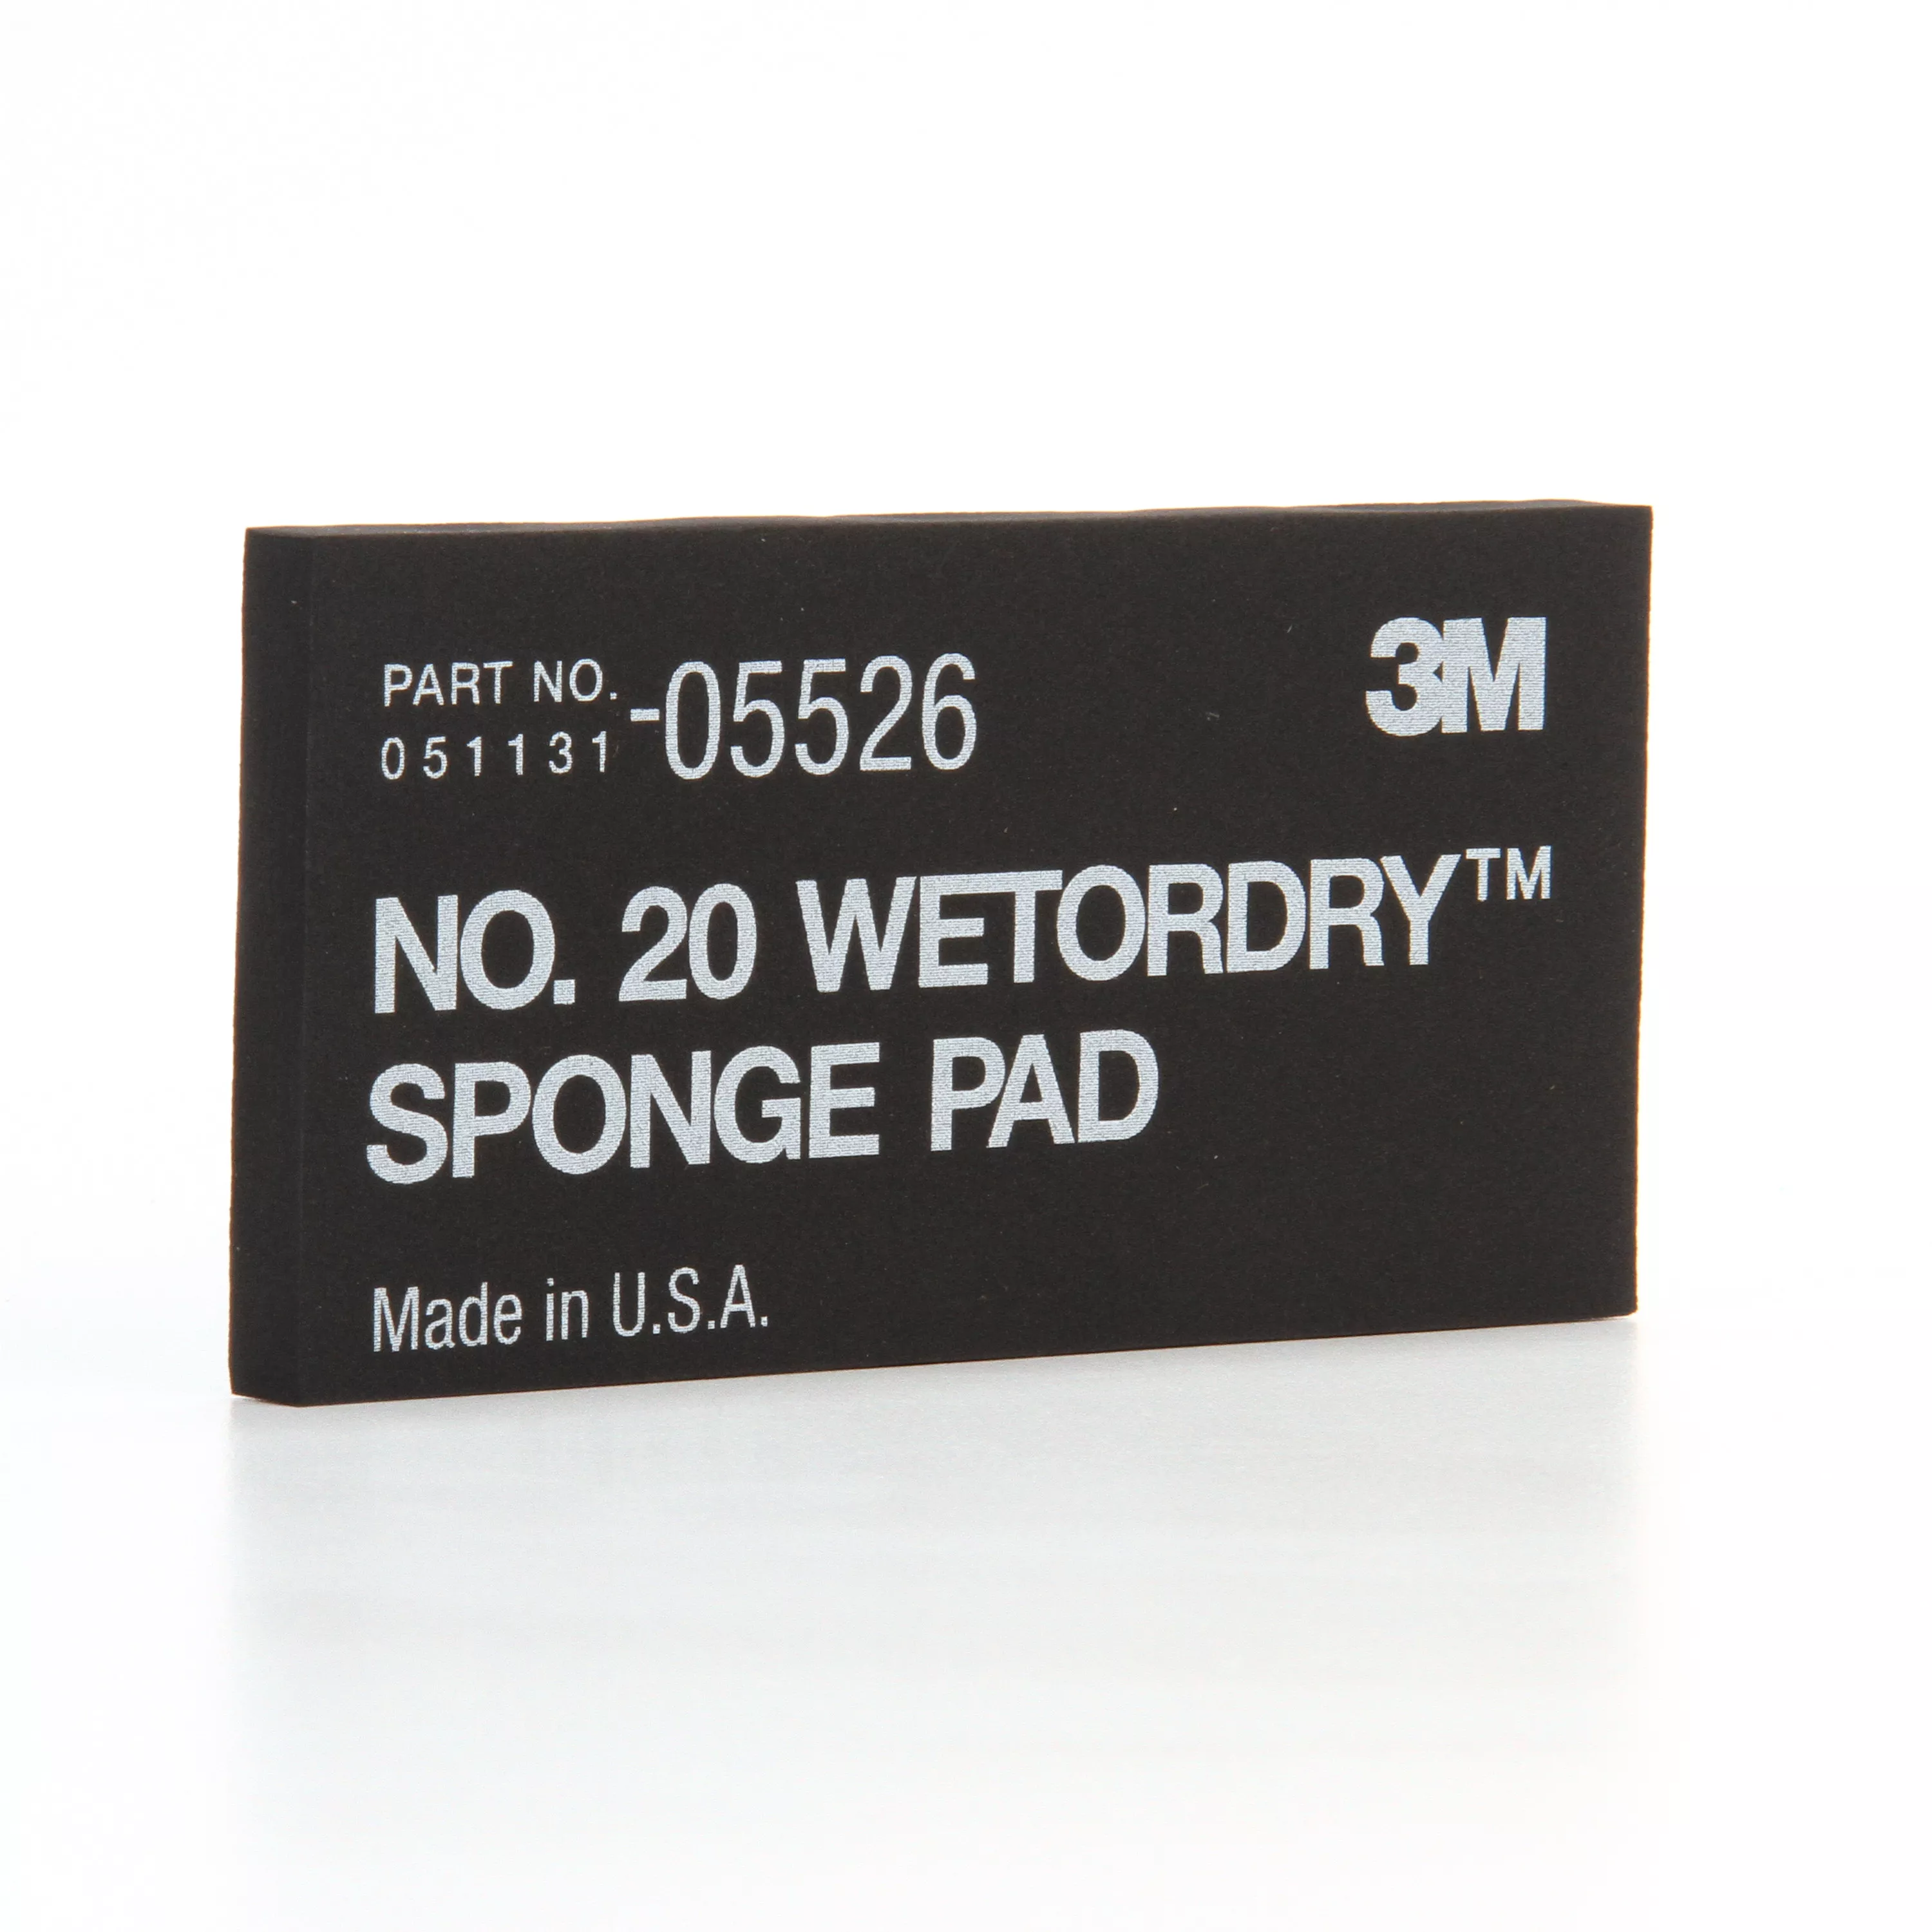 UPC 00051131055261 | 3M™ Wetordry™ Sponge Pad 20